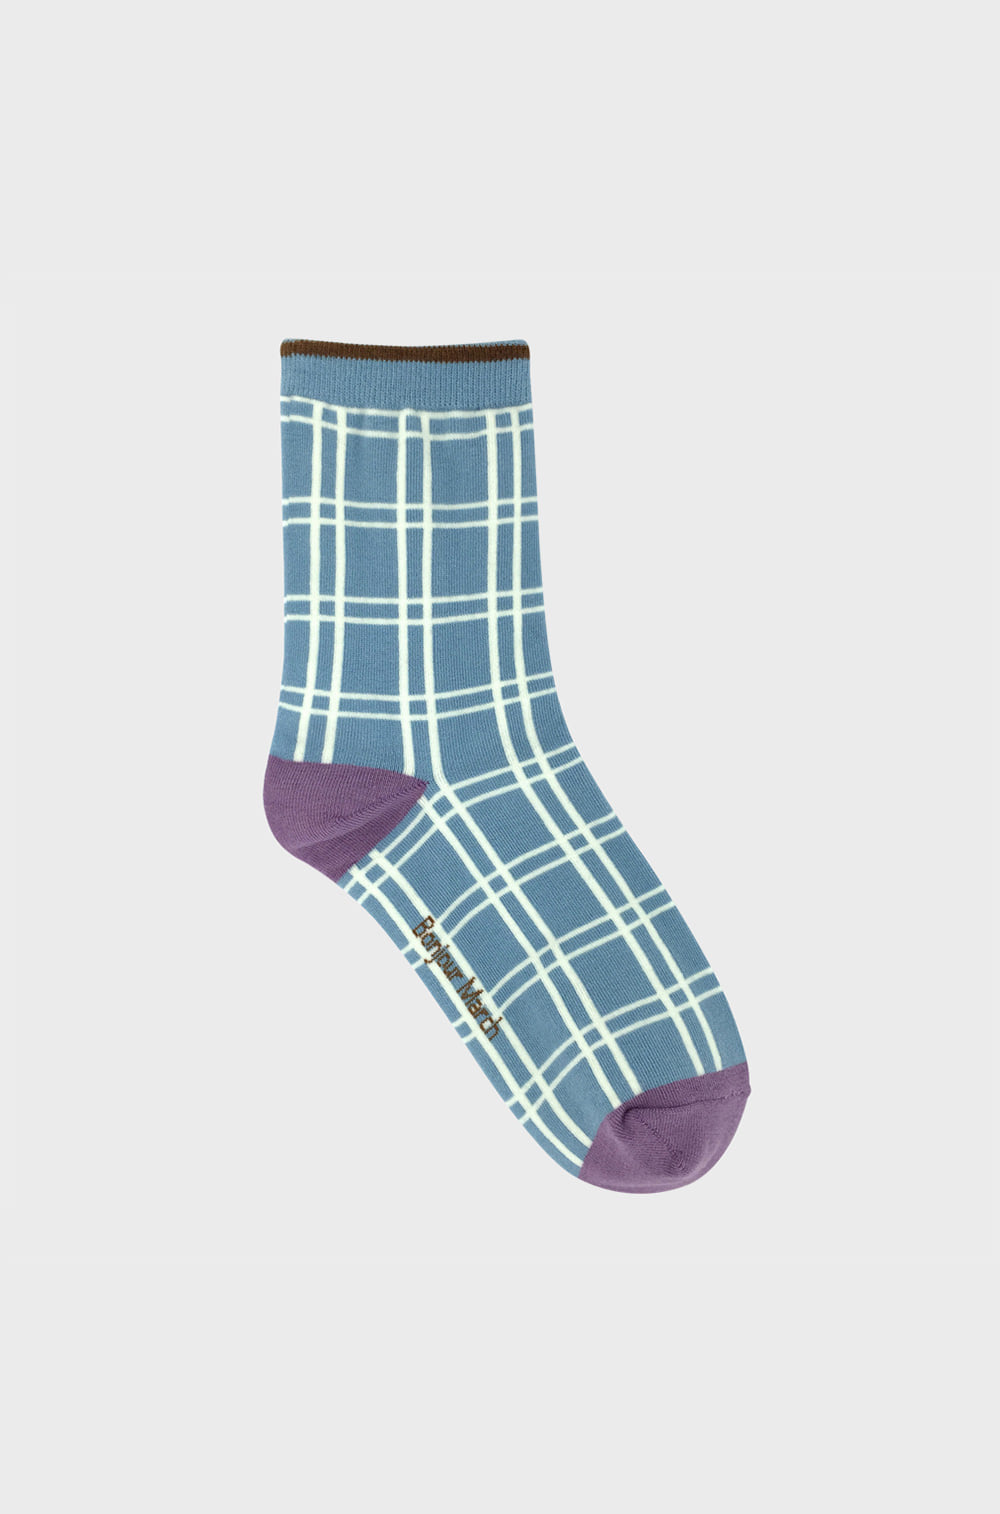 Modern grid socks